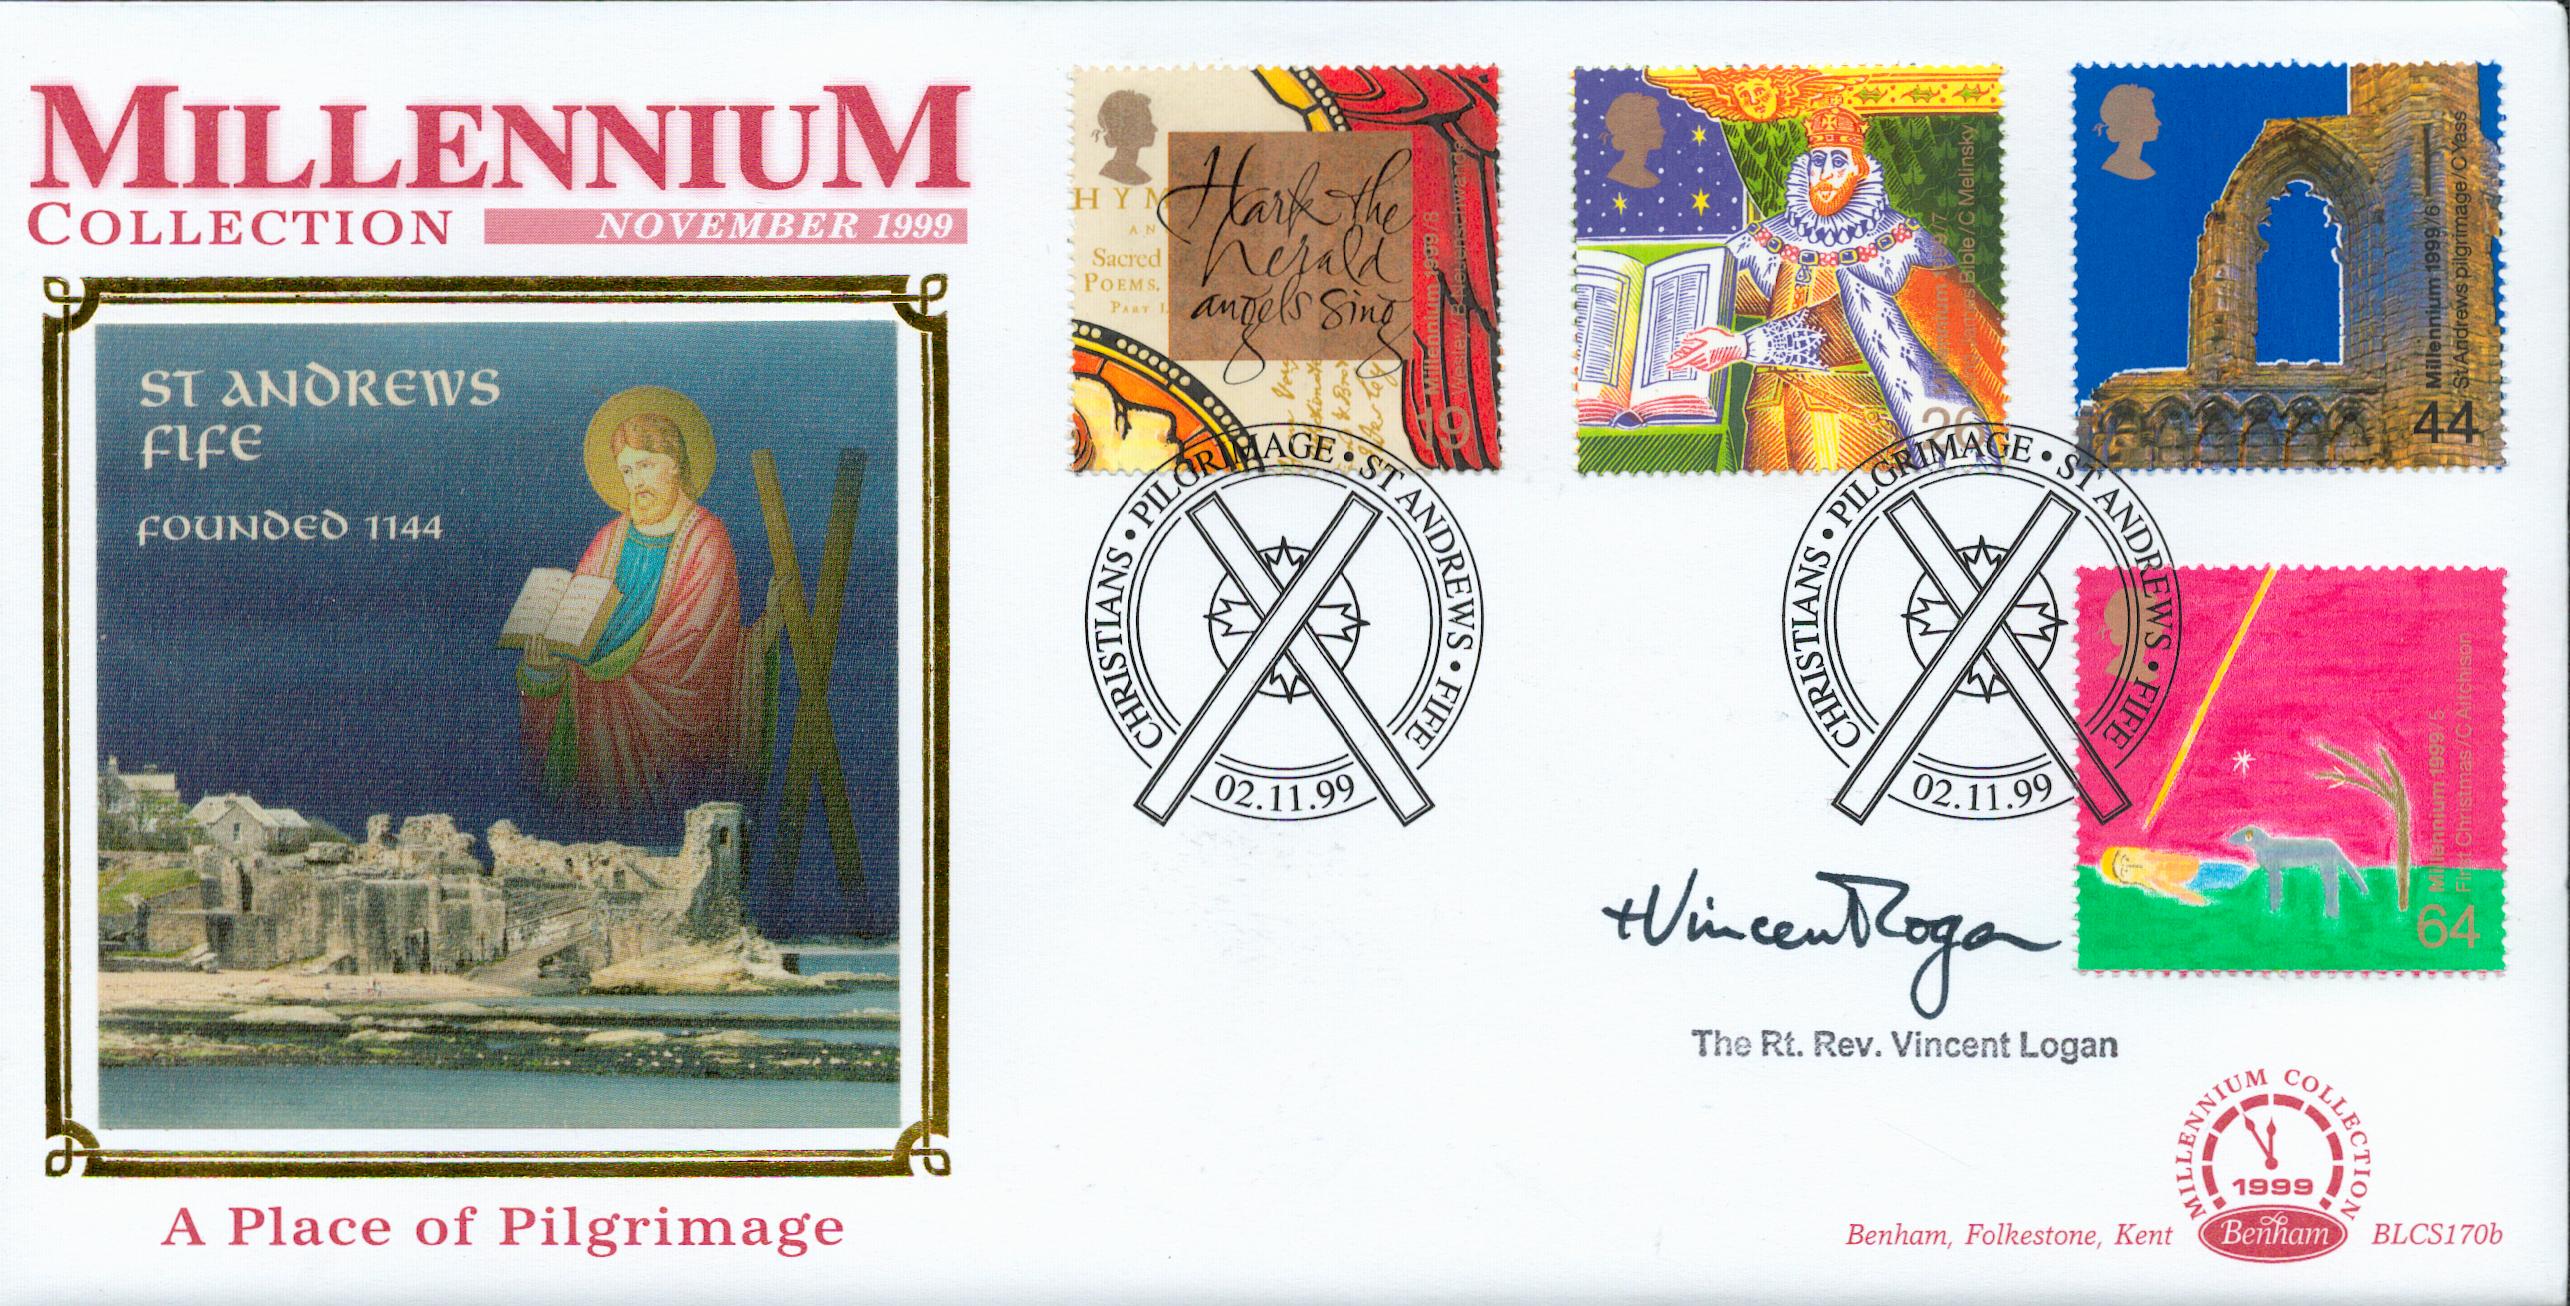 Rt Rev Vincent Logan signed Millennium Collection FDC. 2/11/99 St Andrews postmark. All autographs